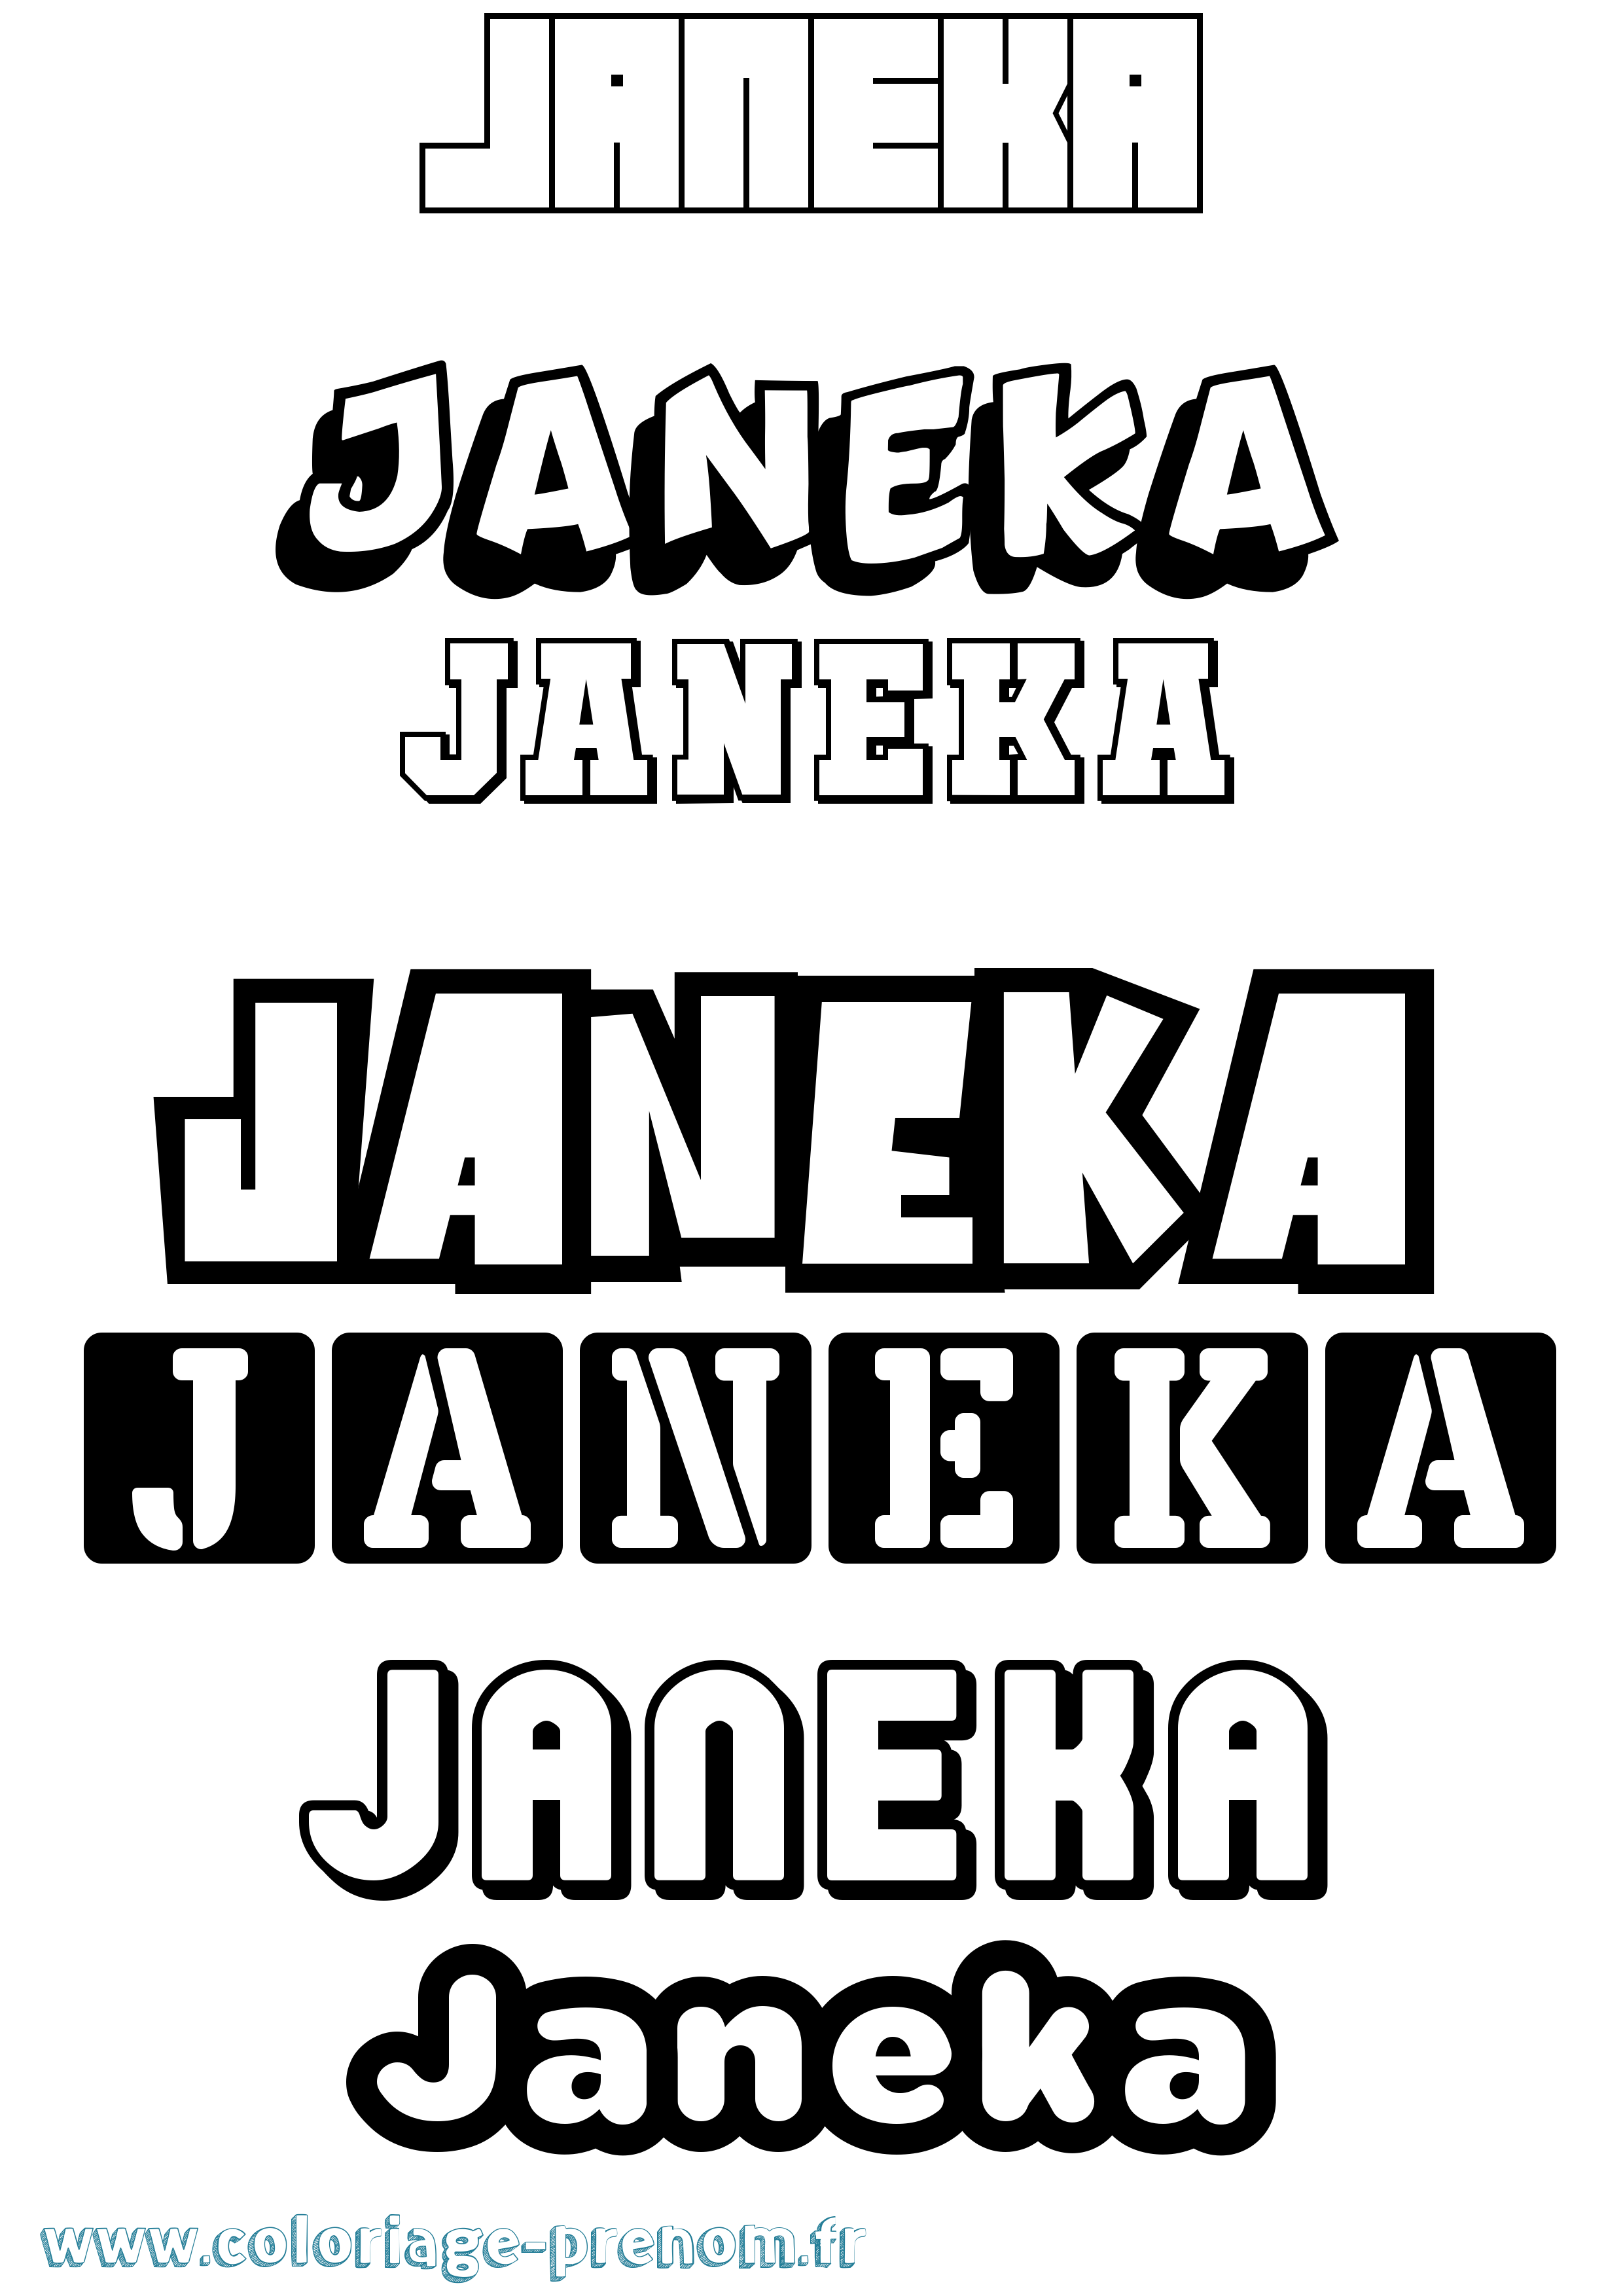 Coloriage prénom Janeka Simple